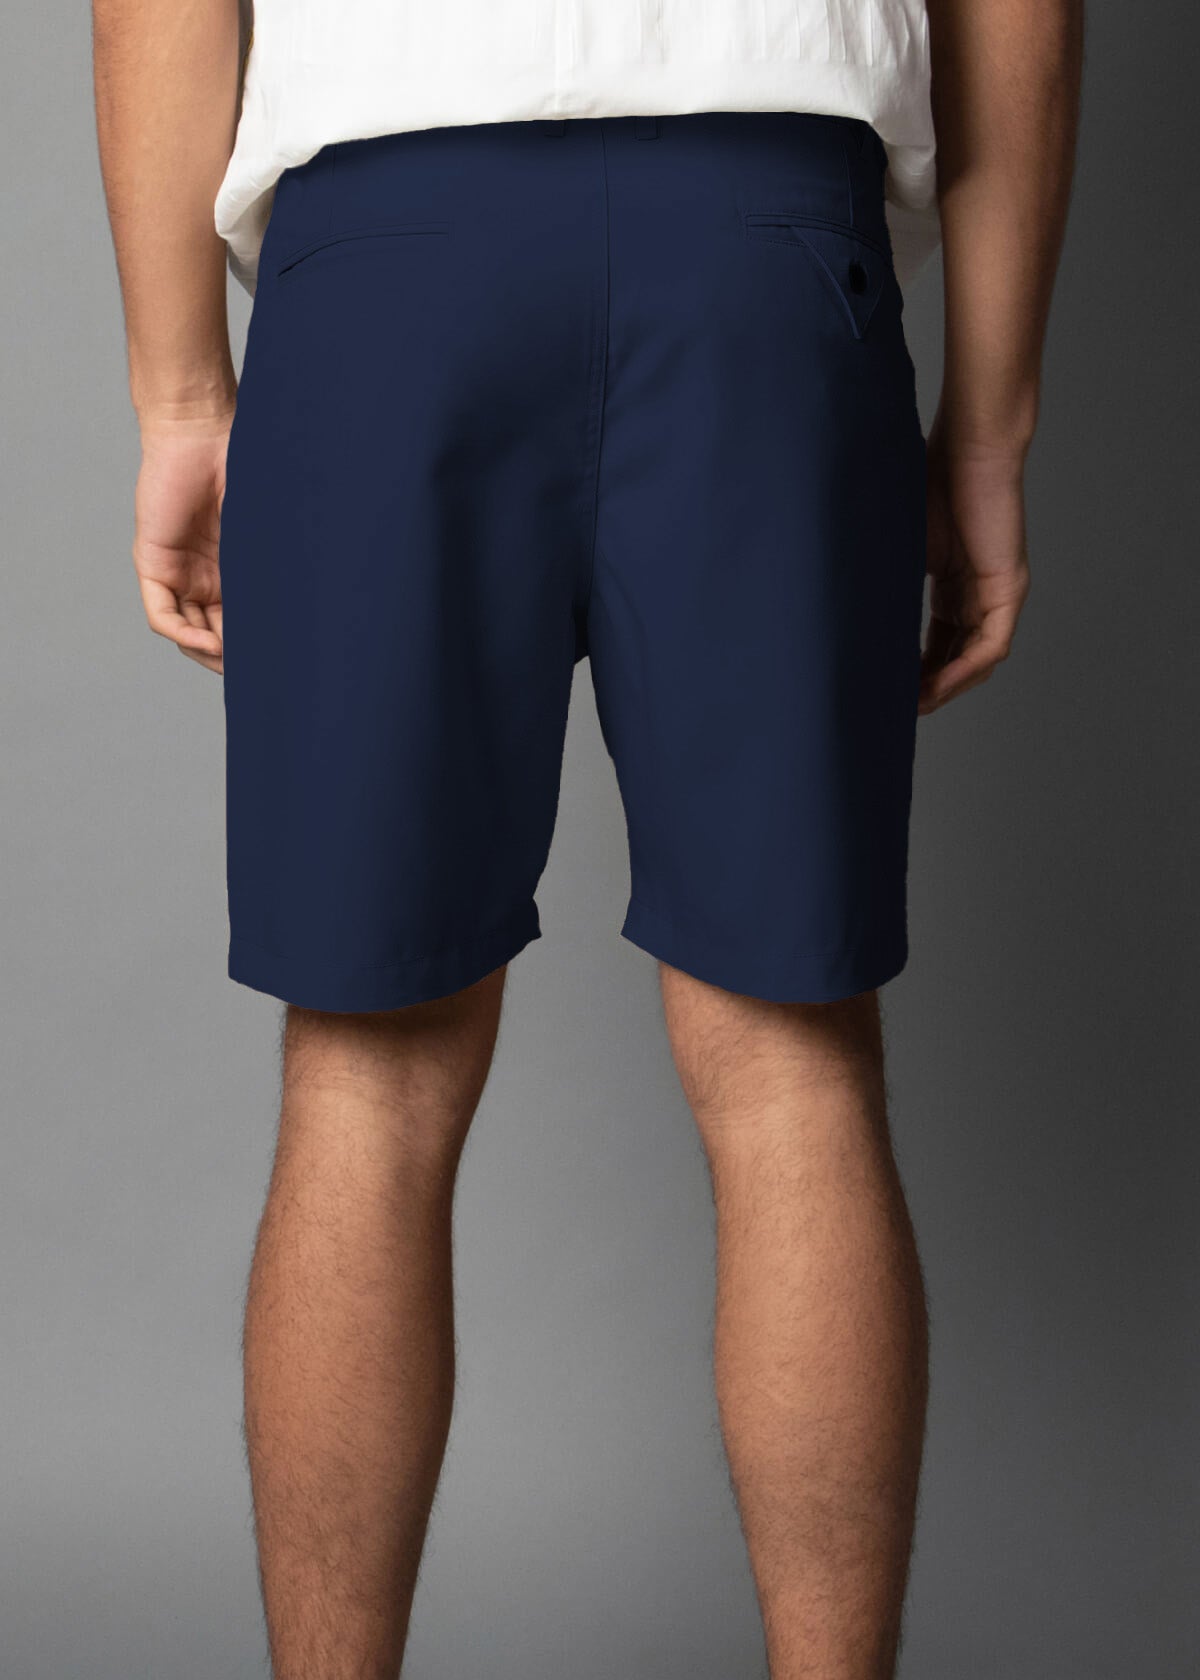 navy blue wool/polyester men's short